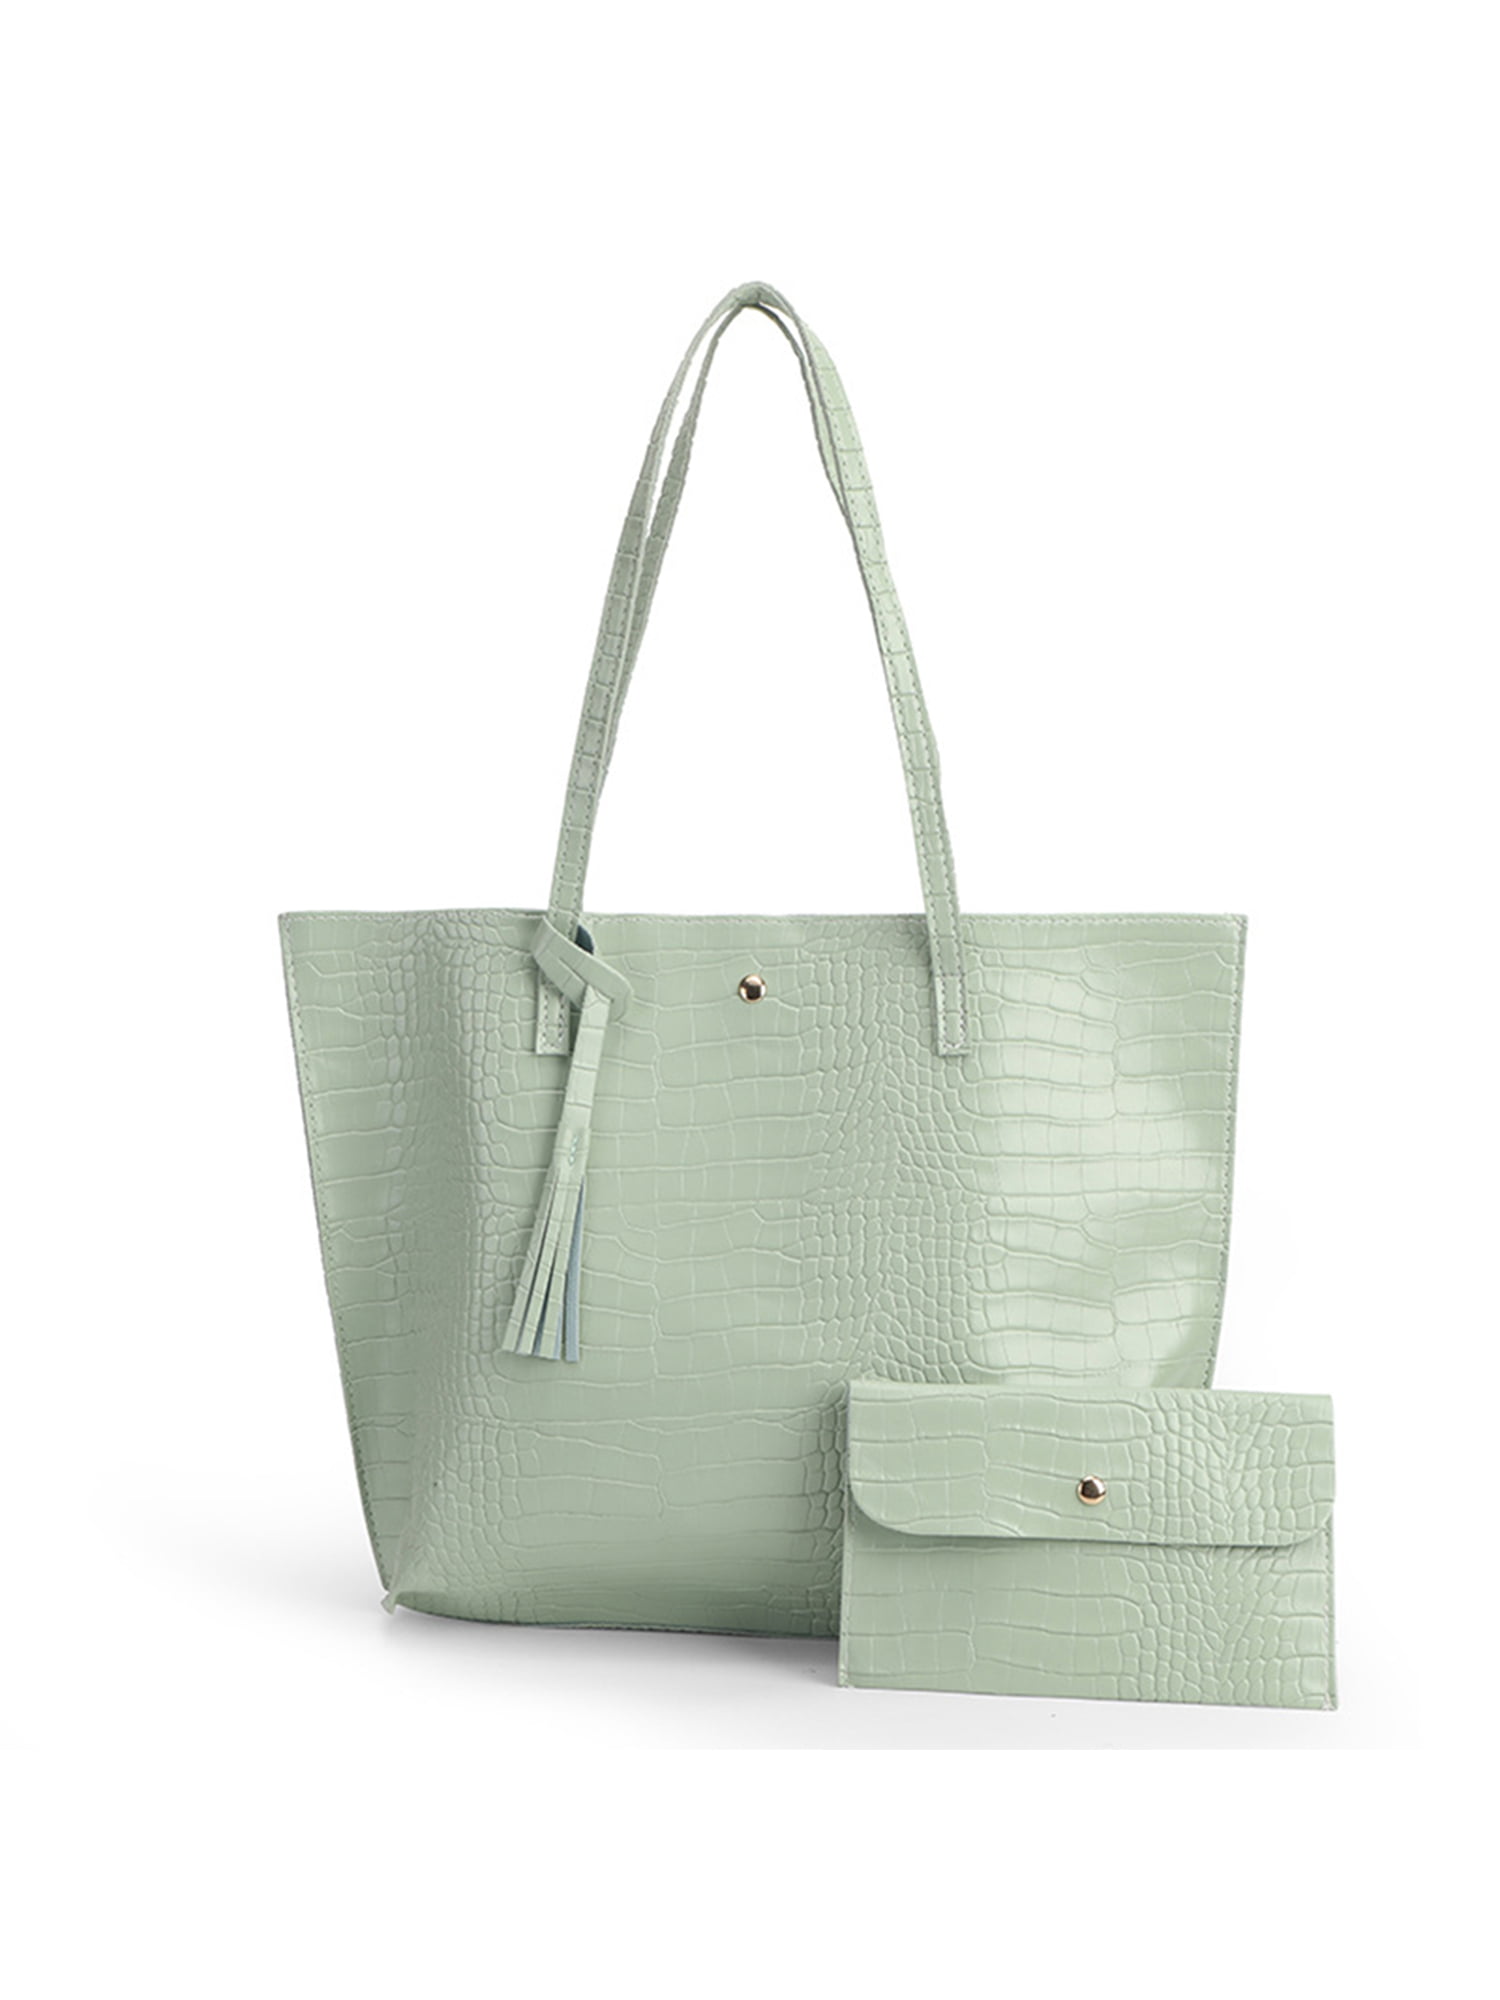 Fashion Mint Green Tassel Handbag Shoulder Bag